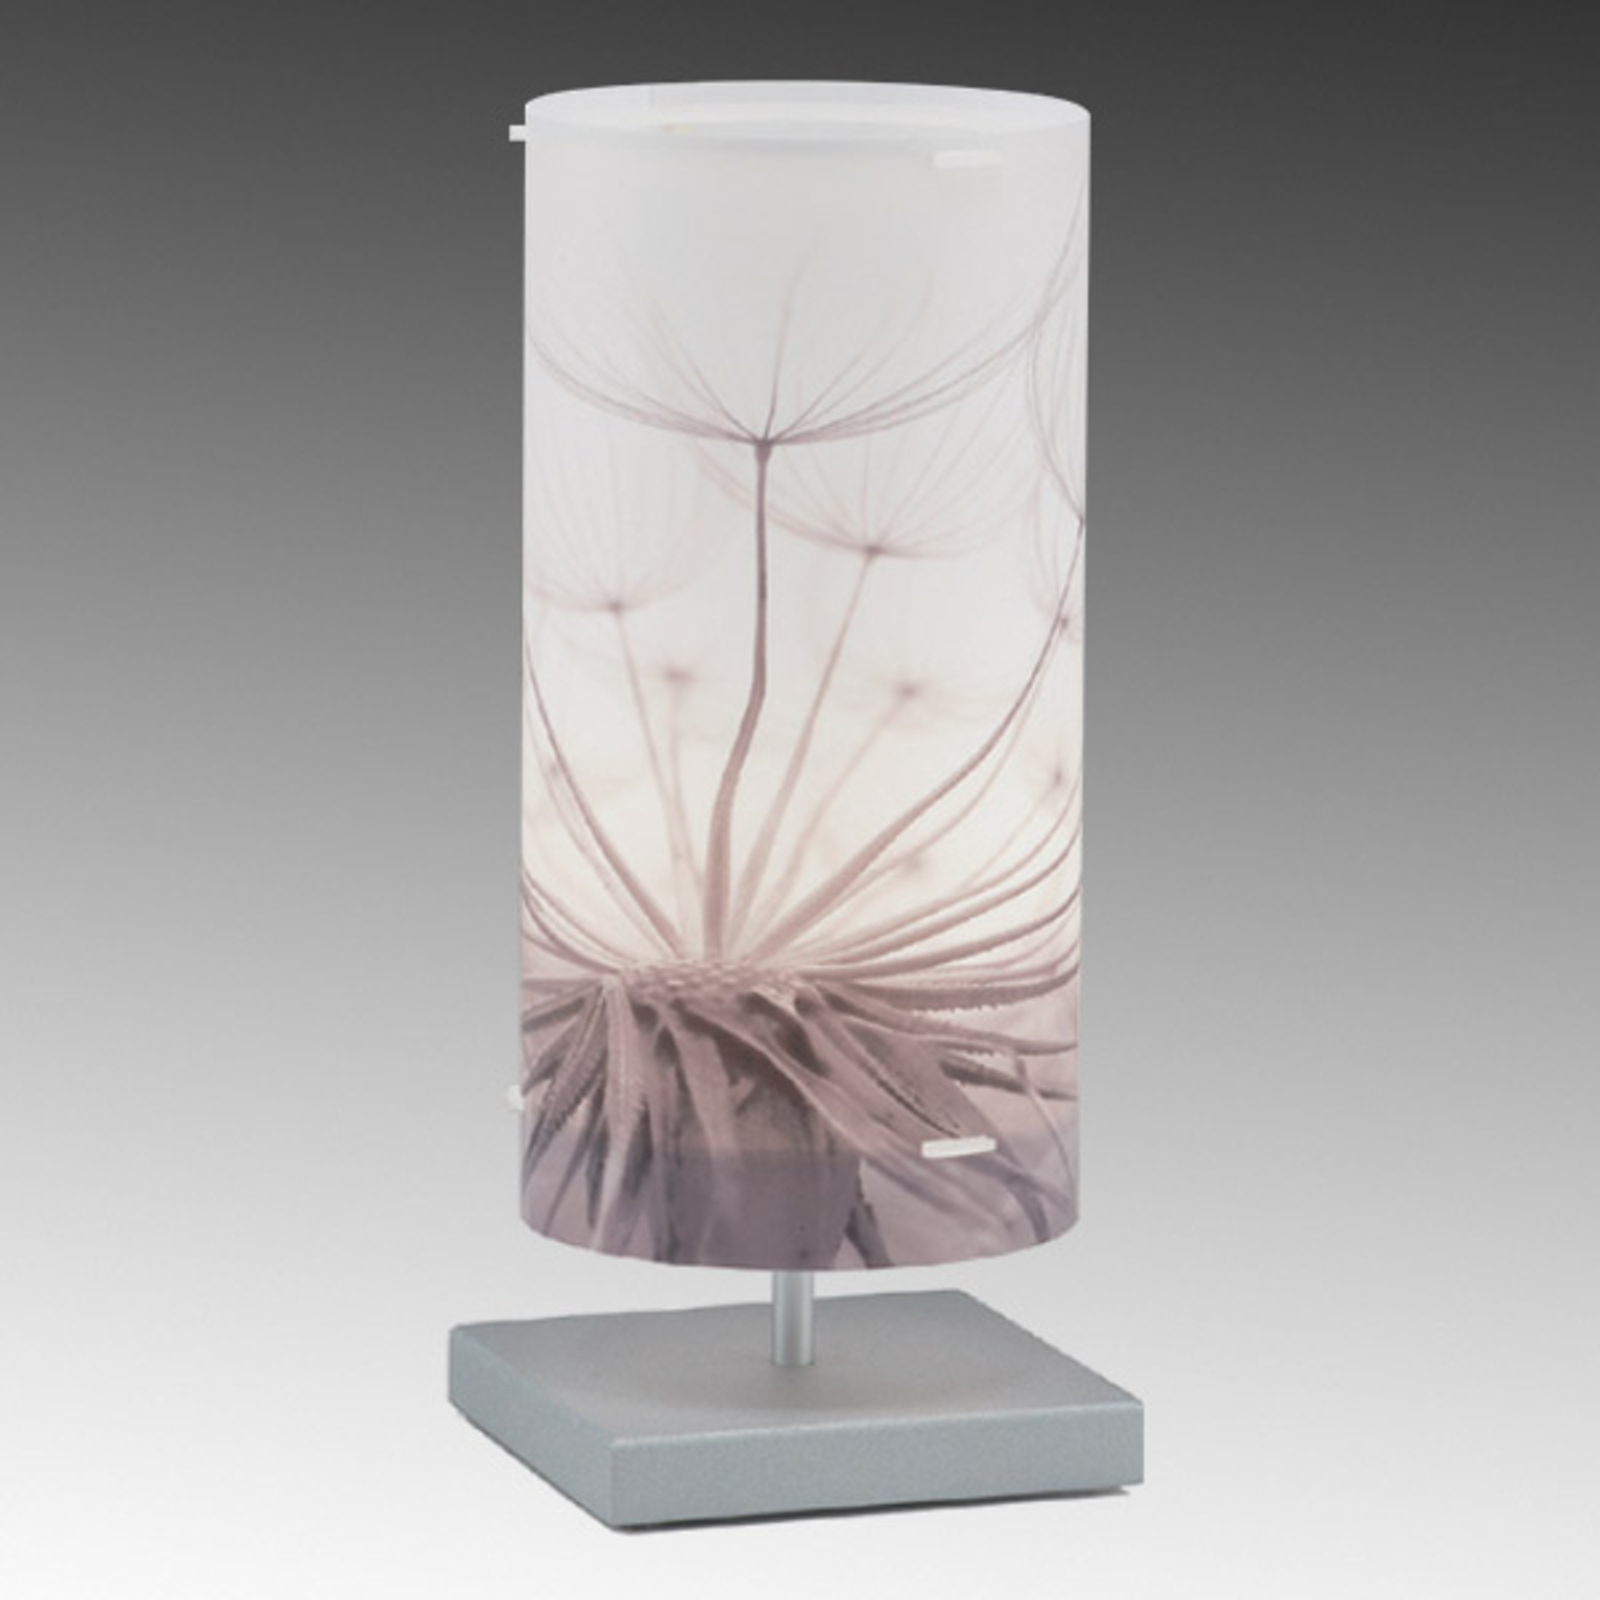 Dandelion - Bordslampa i naturlig design